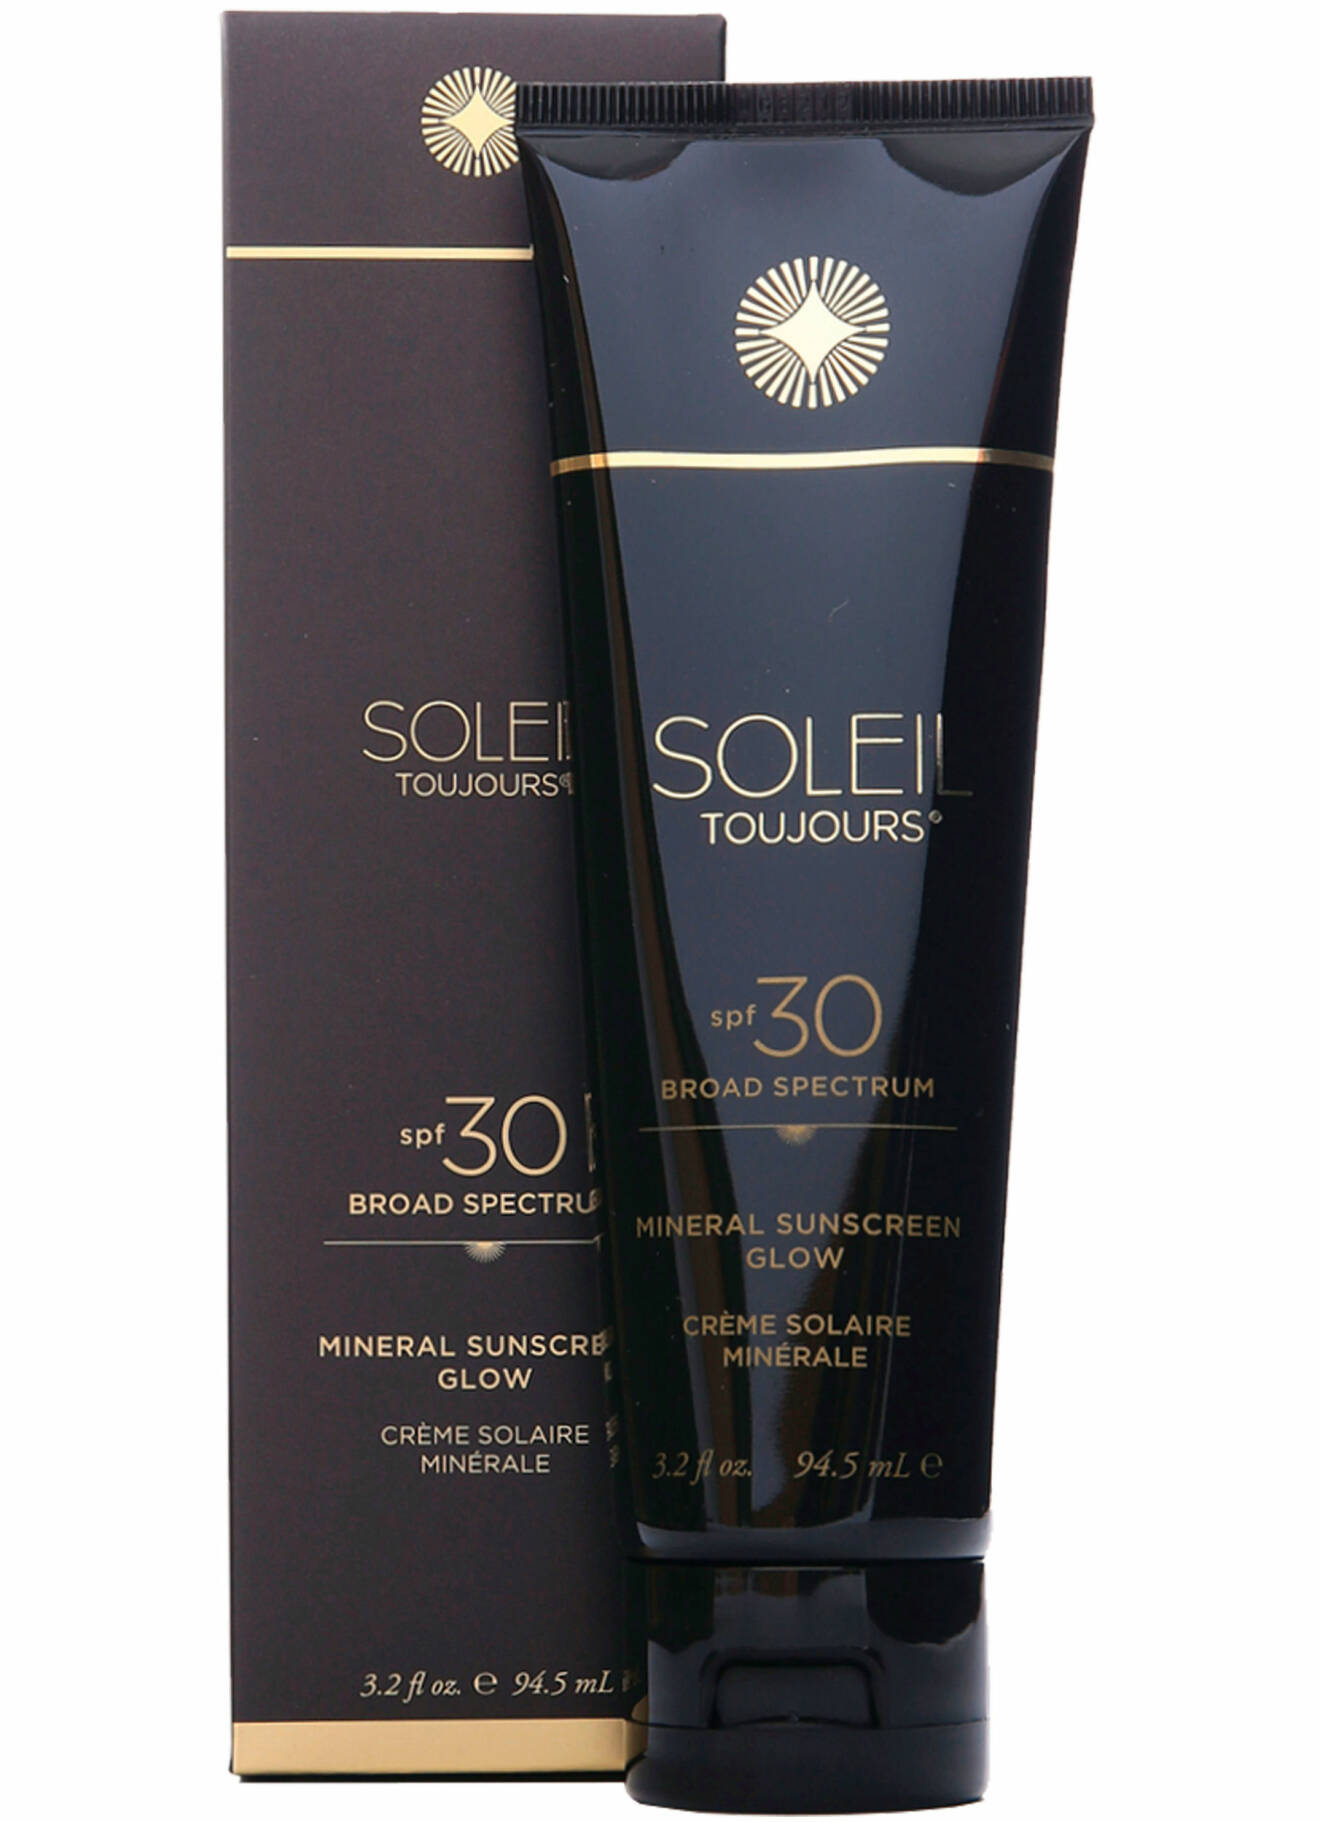 Mineral Sunscreen Glow SPF 30 från Soleil Toujours.